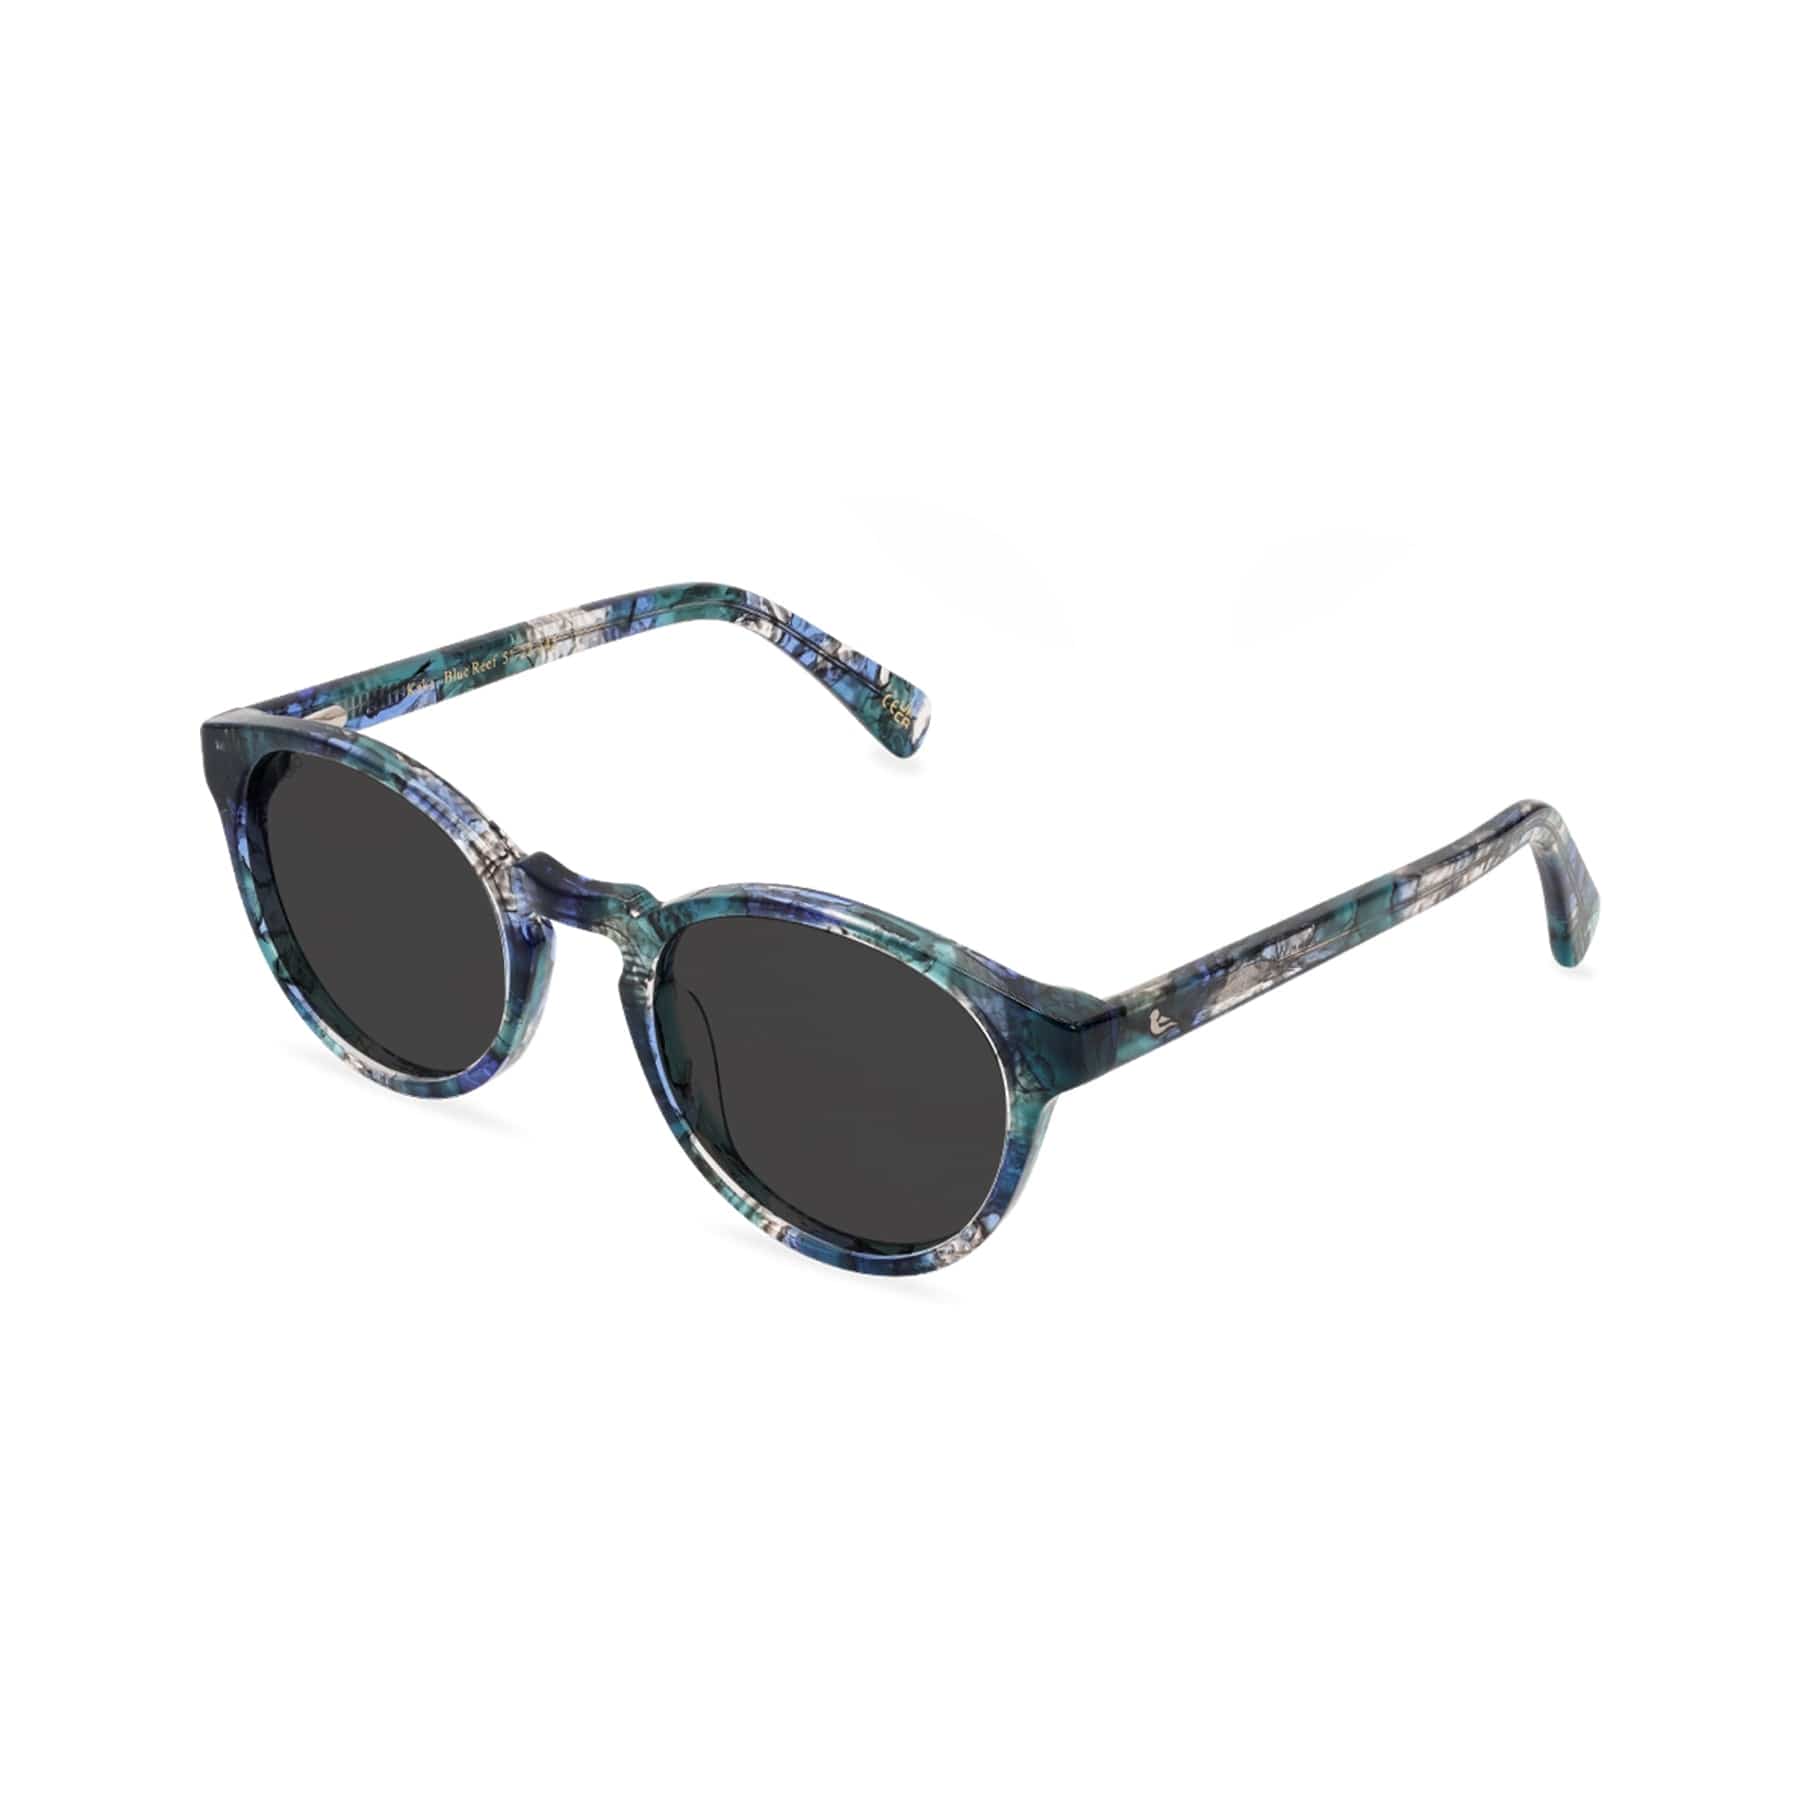 Kaka sunglasses reef